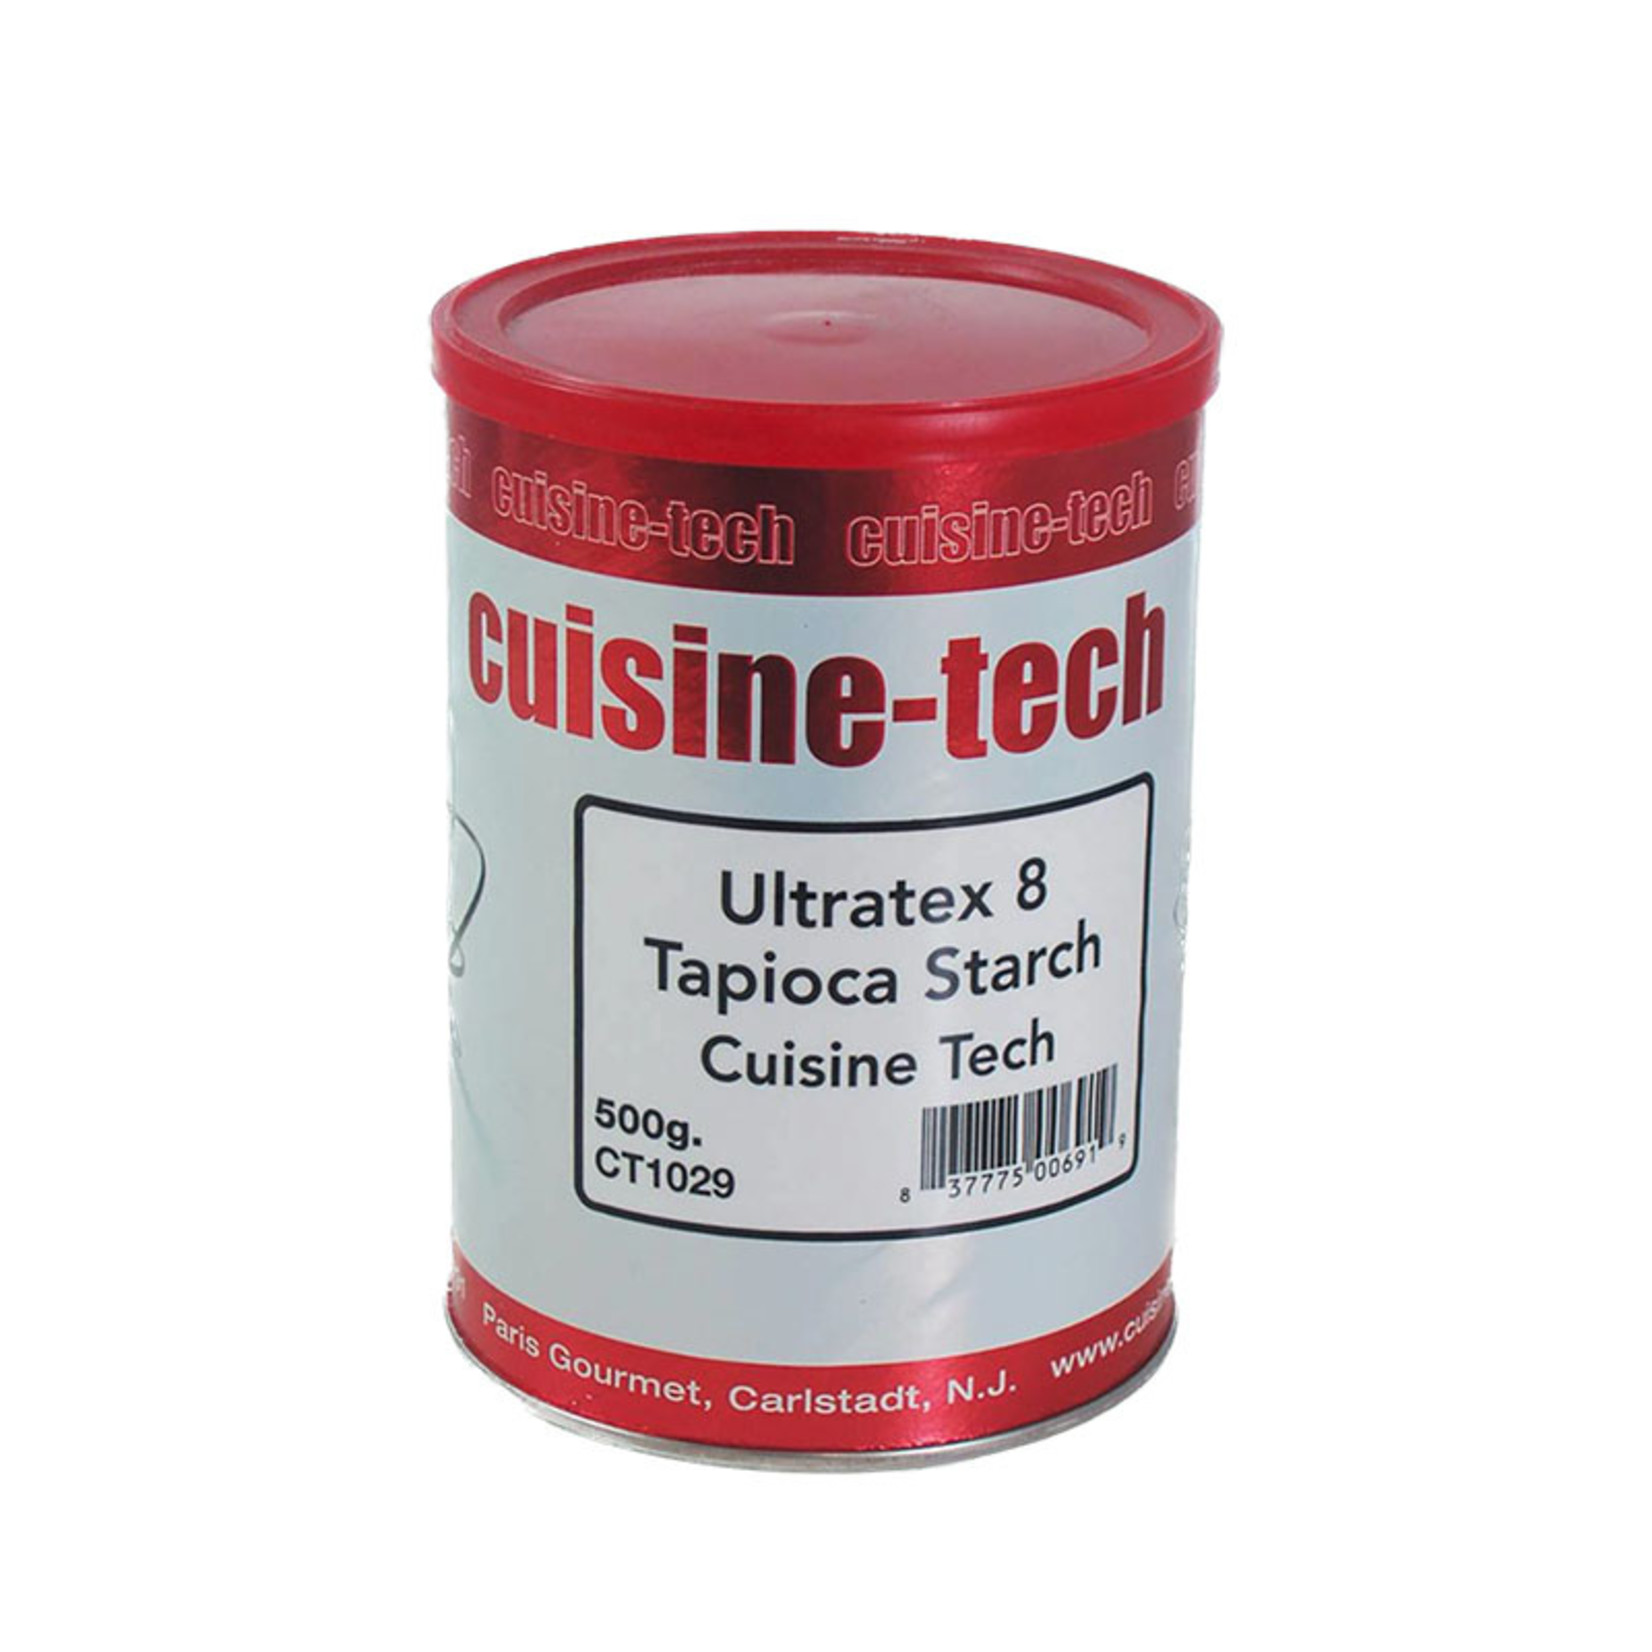 Cuisine Tech Cuisine Tech - Tapioca Starch, Ultratex 8 - 1 lb, CT1029